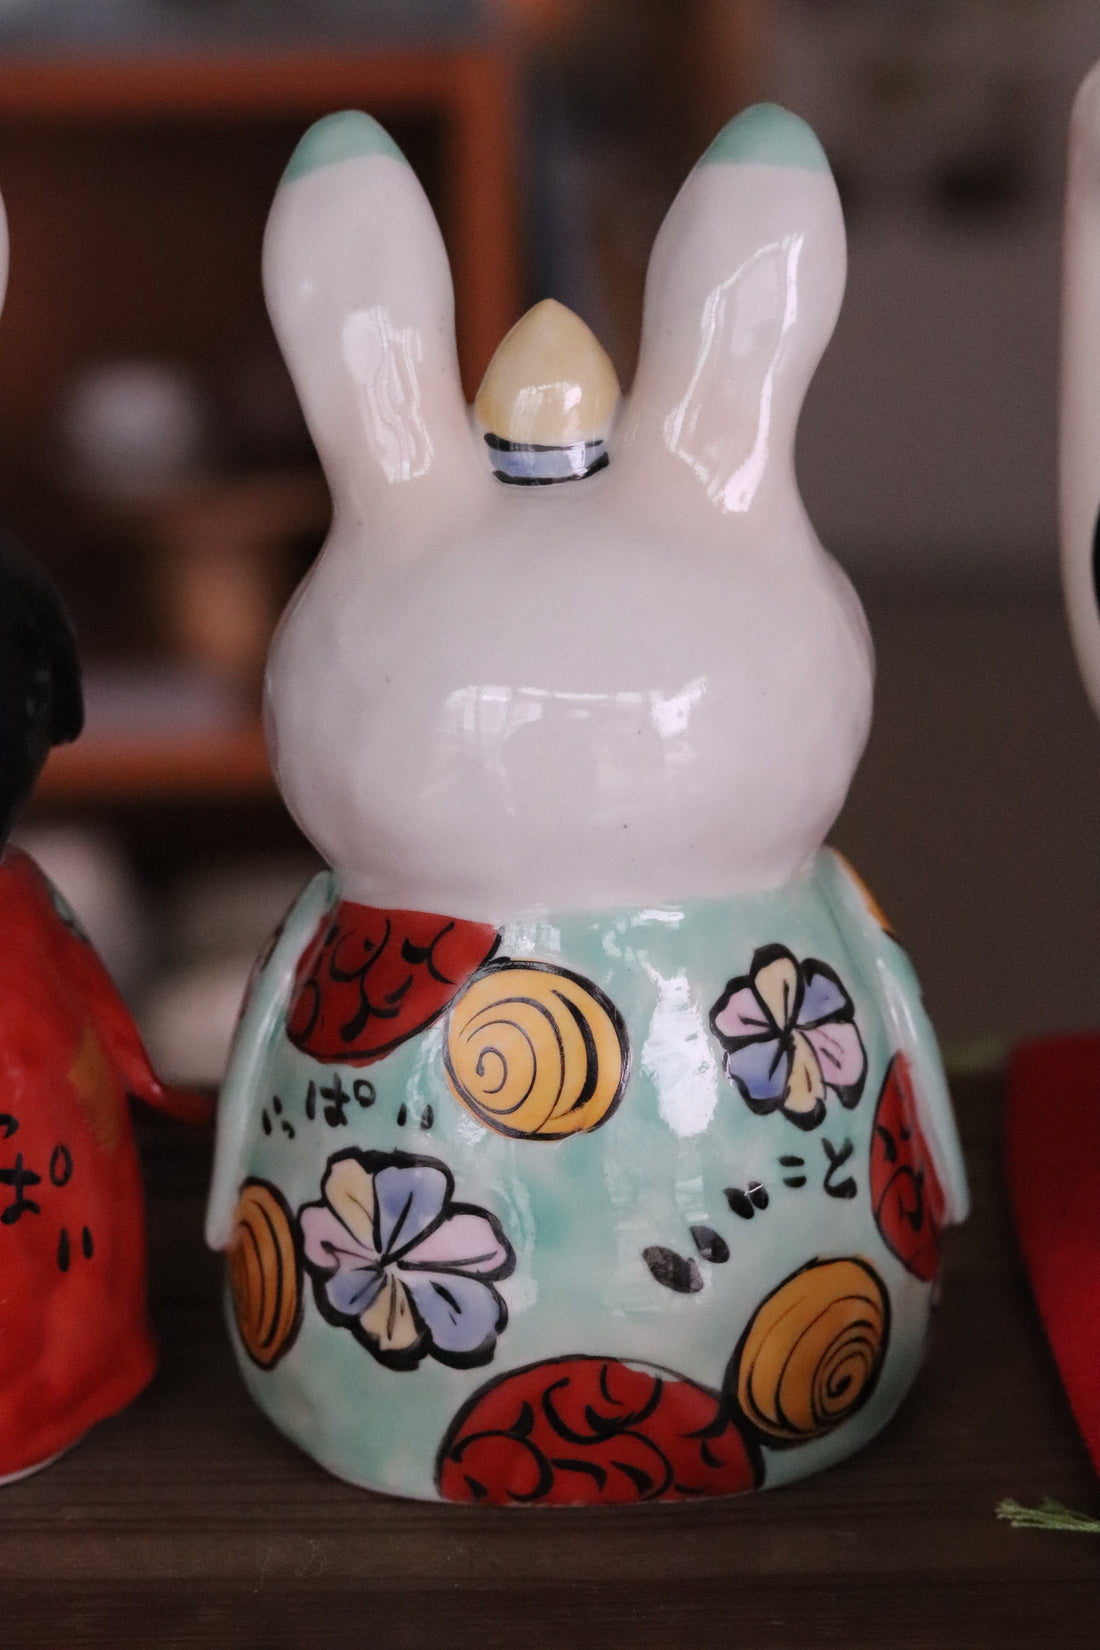 Yudachigama Hand-painted Rabbit in Kimono Decorations Set